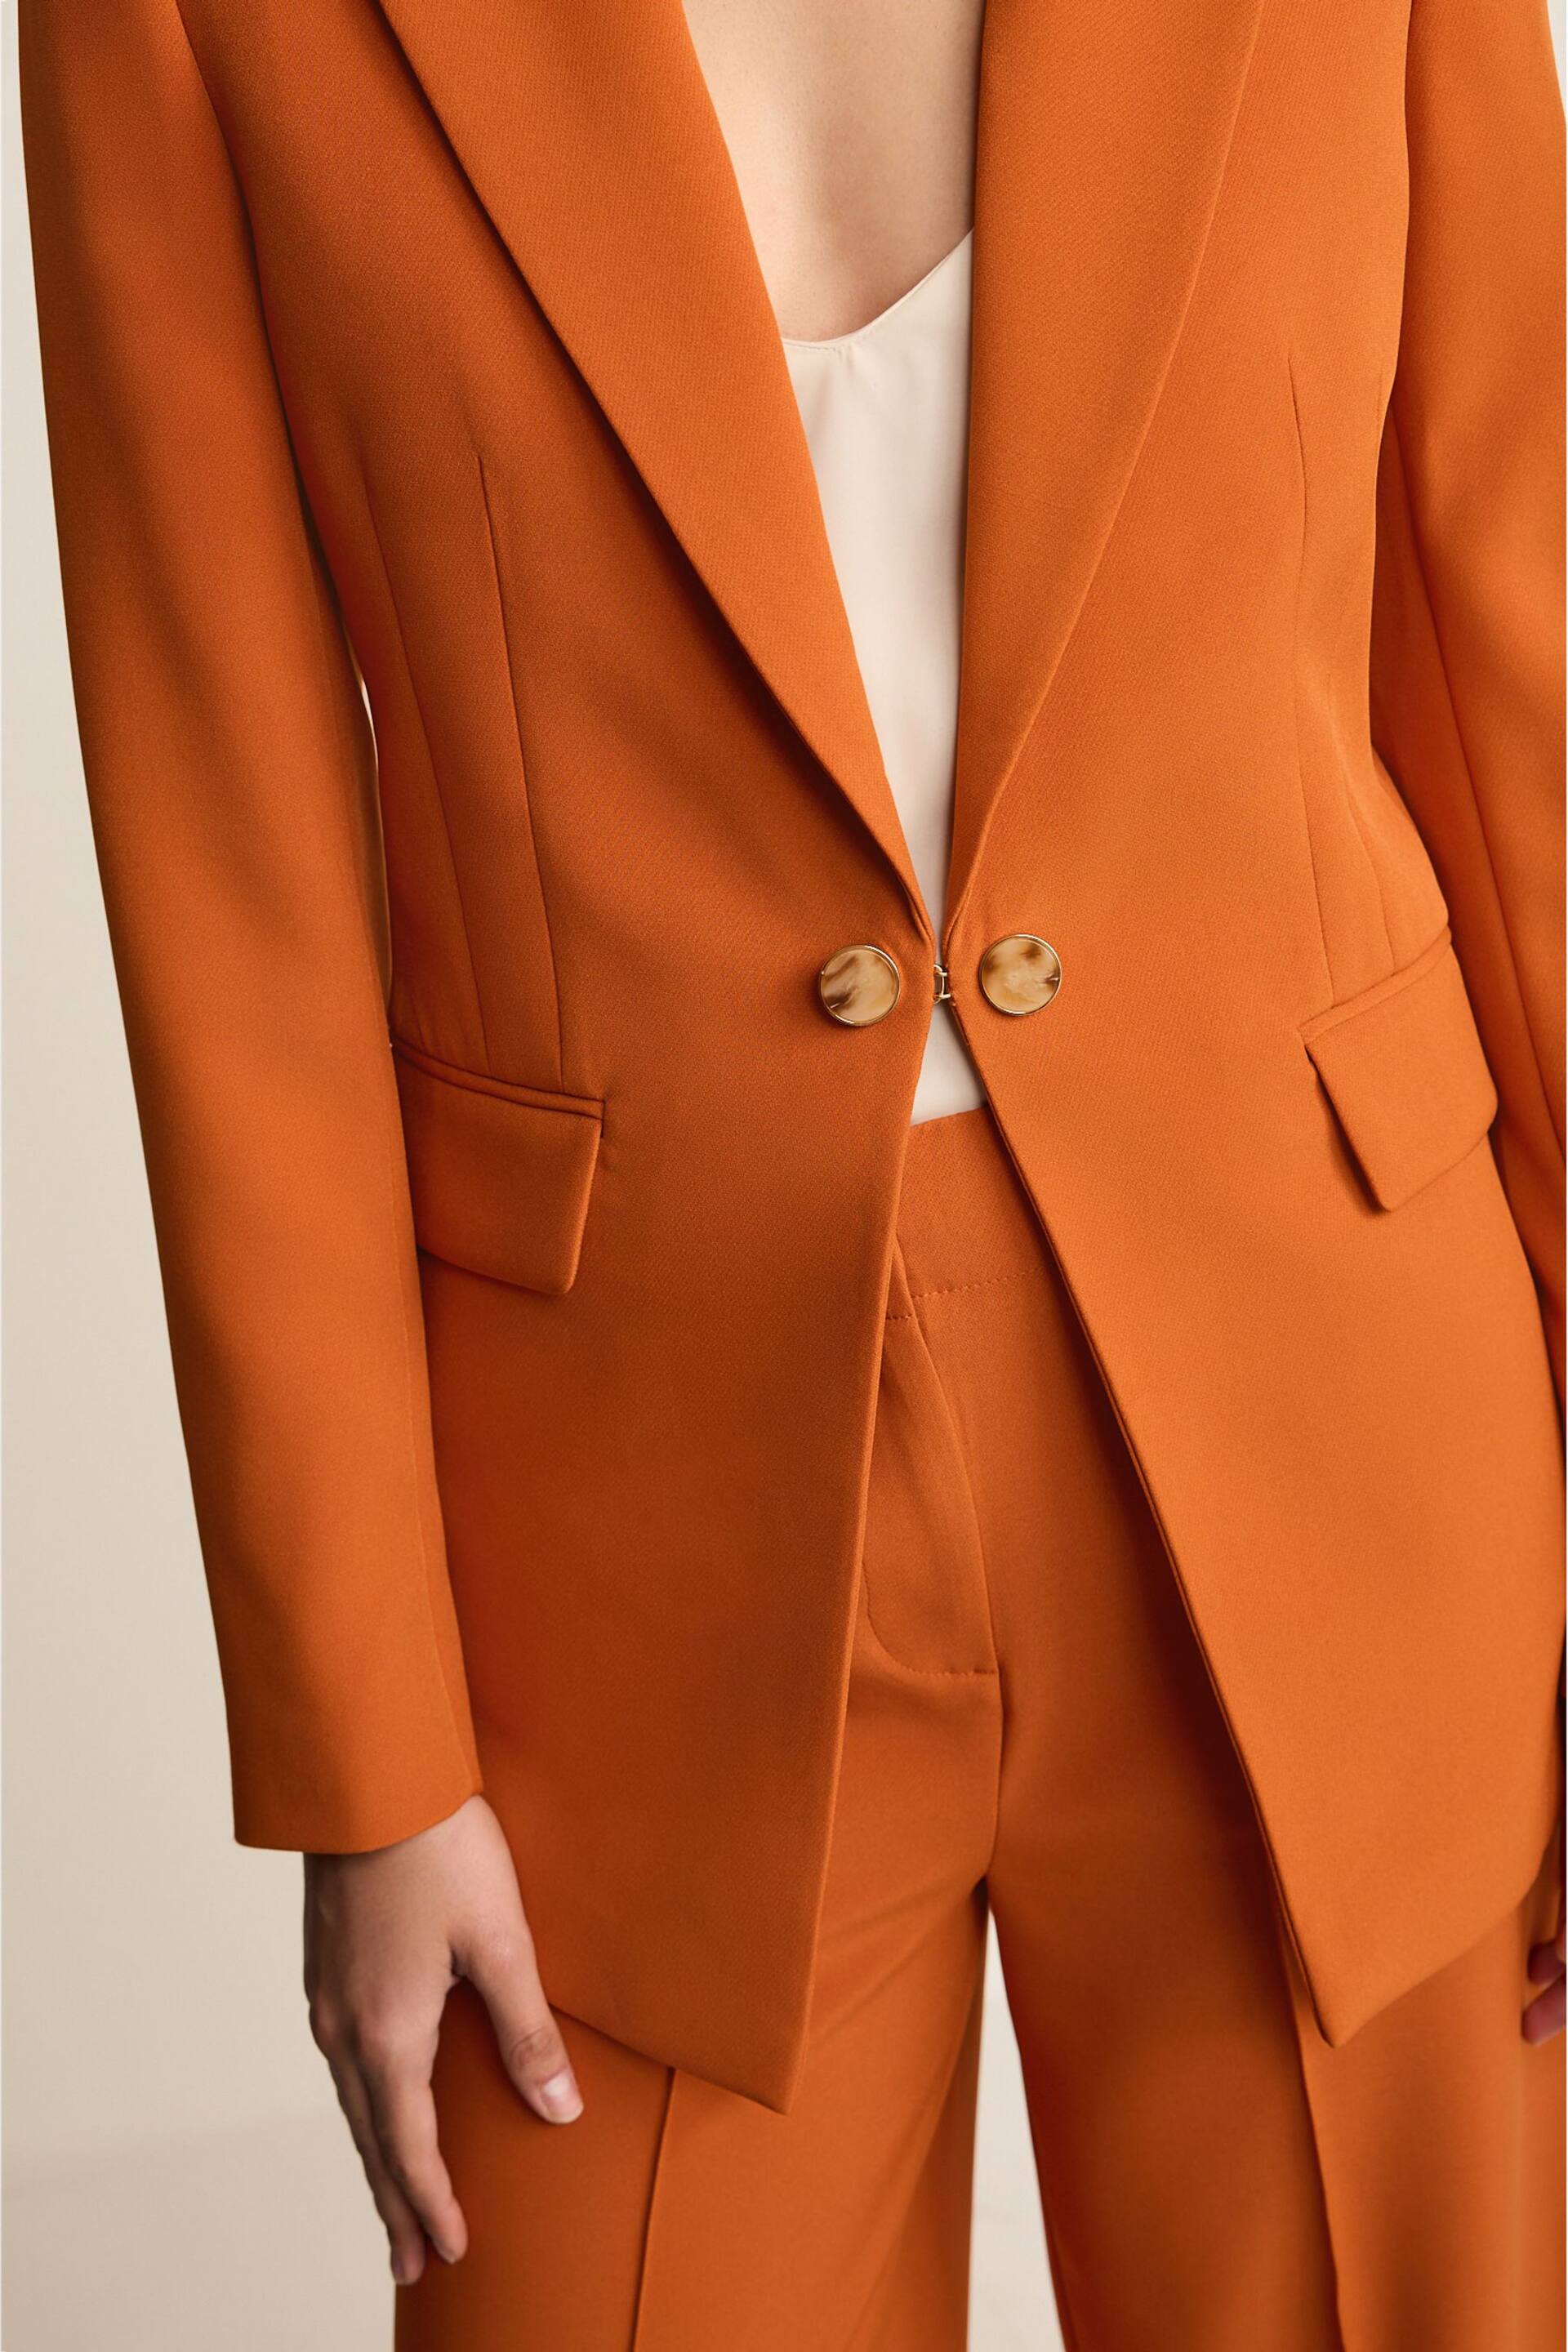 Orange Tailored Crepe Edge to Edge Fitted Blazer - Image 5 of 7